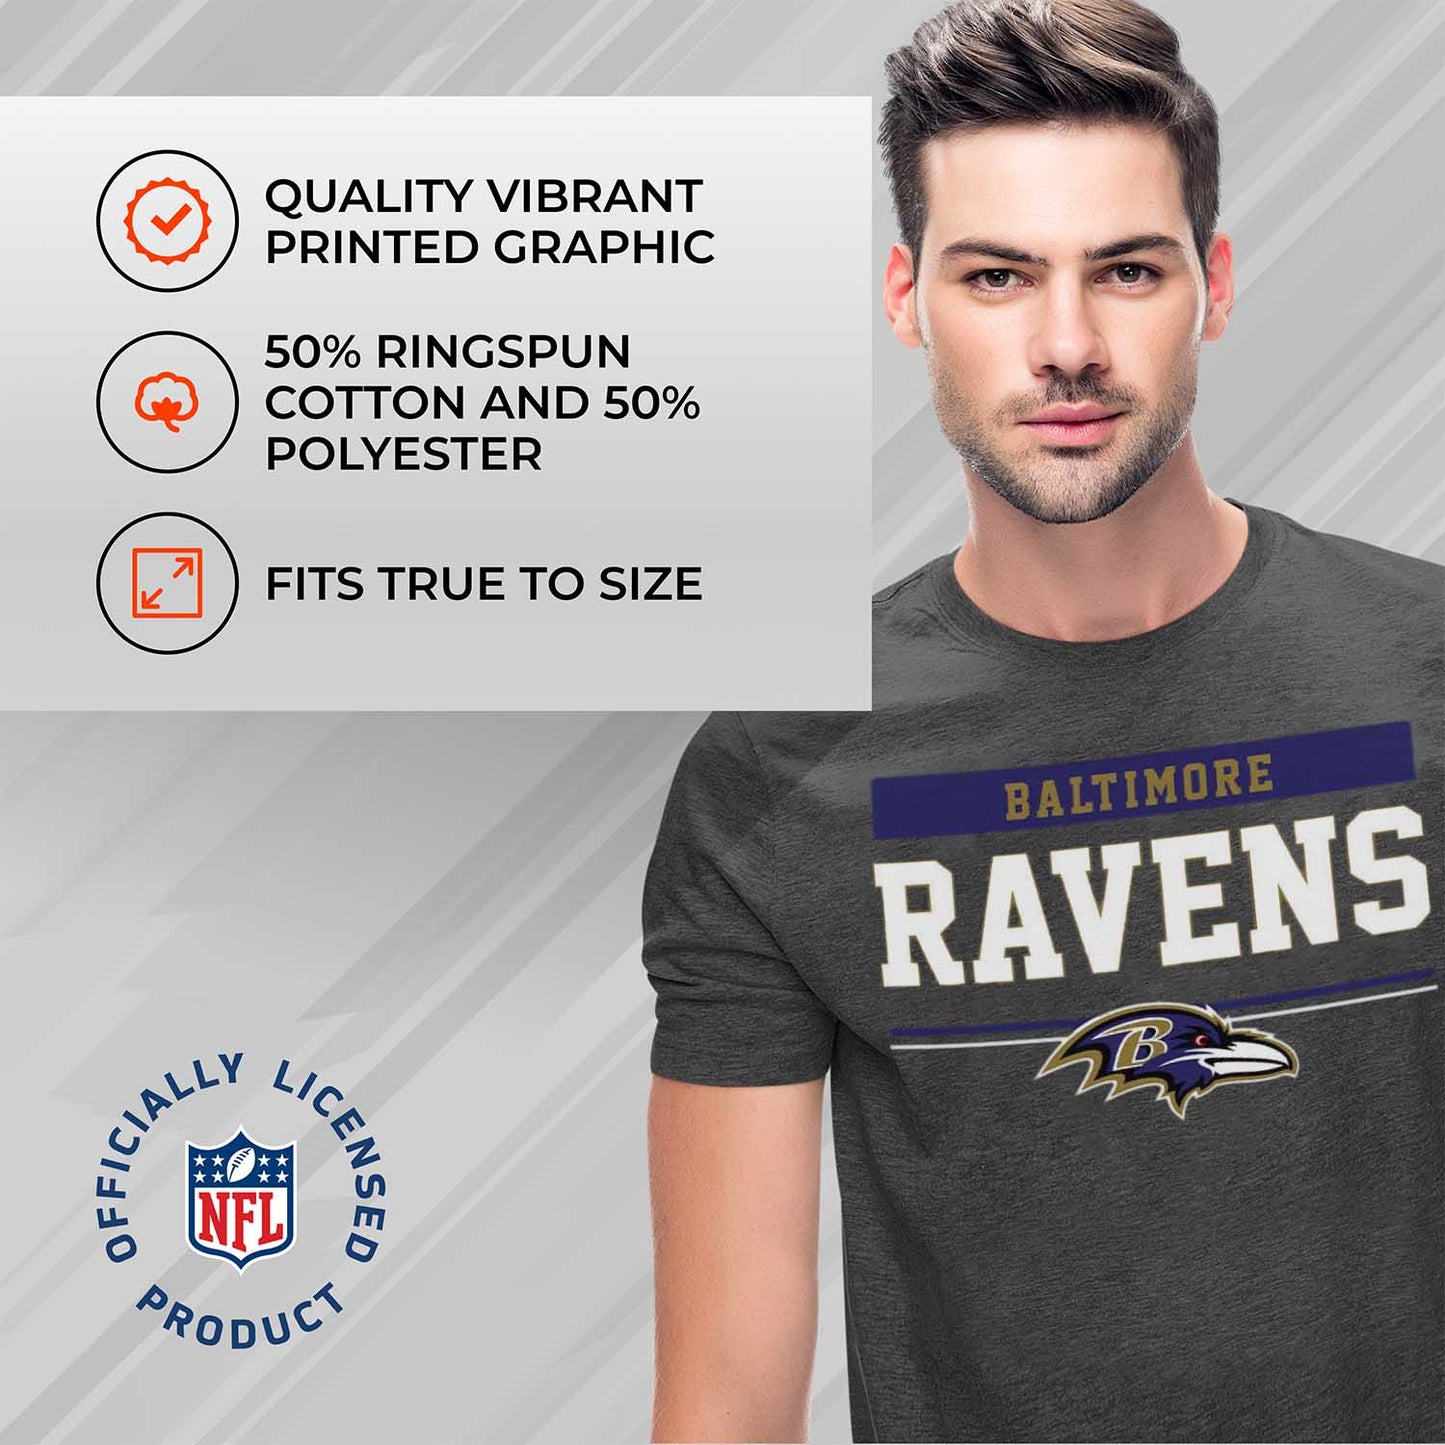 Baltimore Ravens NFL Adult Team Block Tagless T-Shirt - Charcoal